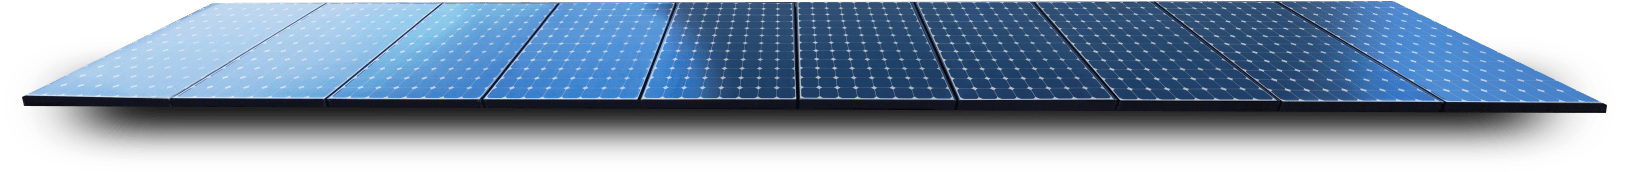 Solar Energy Partners Greenville solar panel.